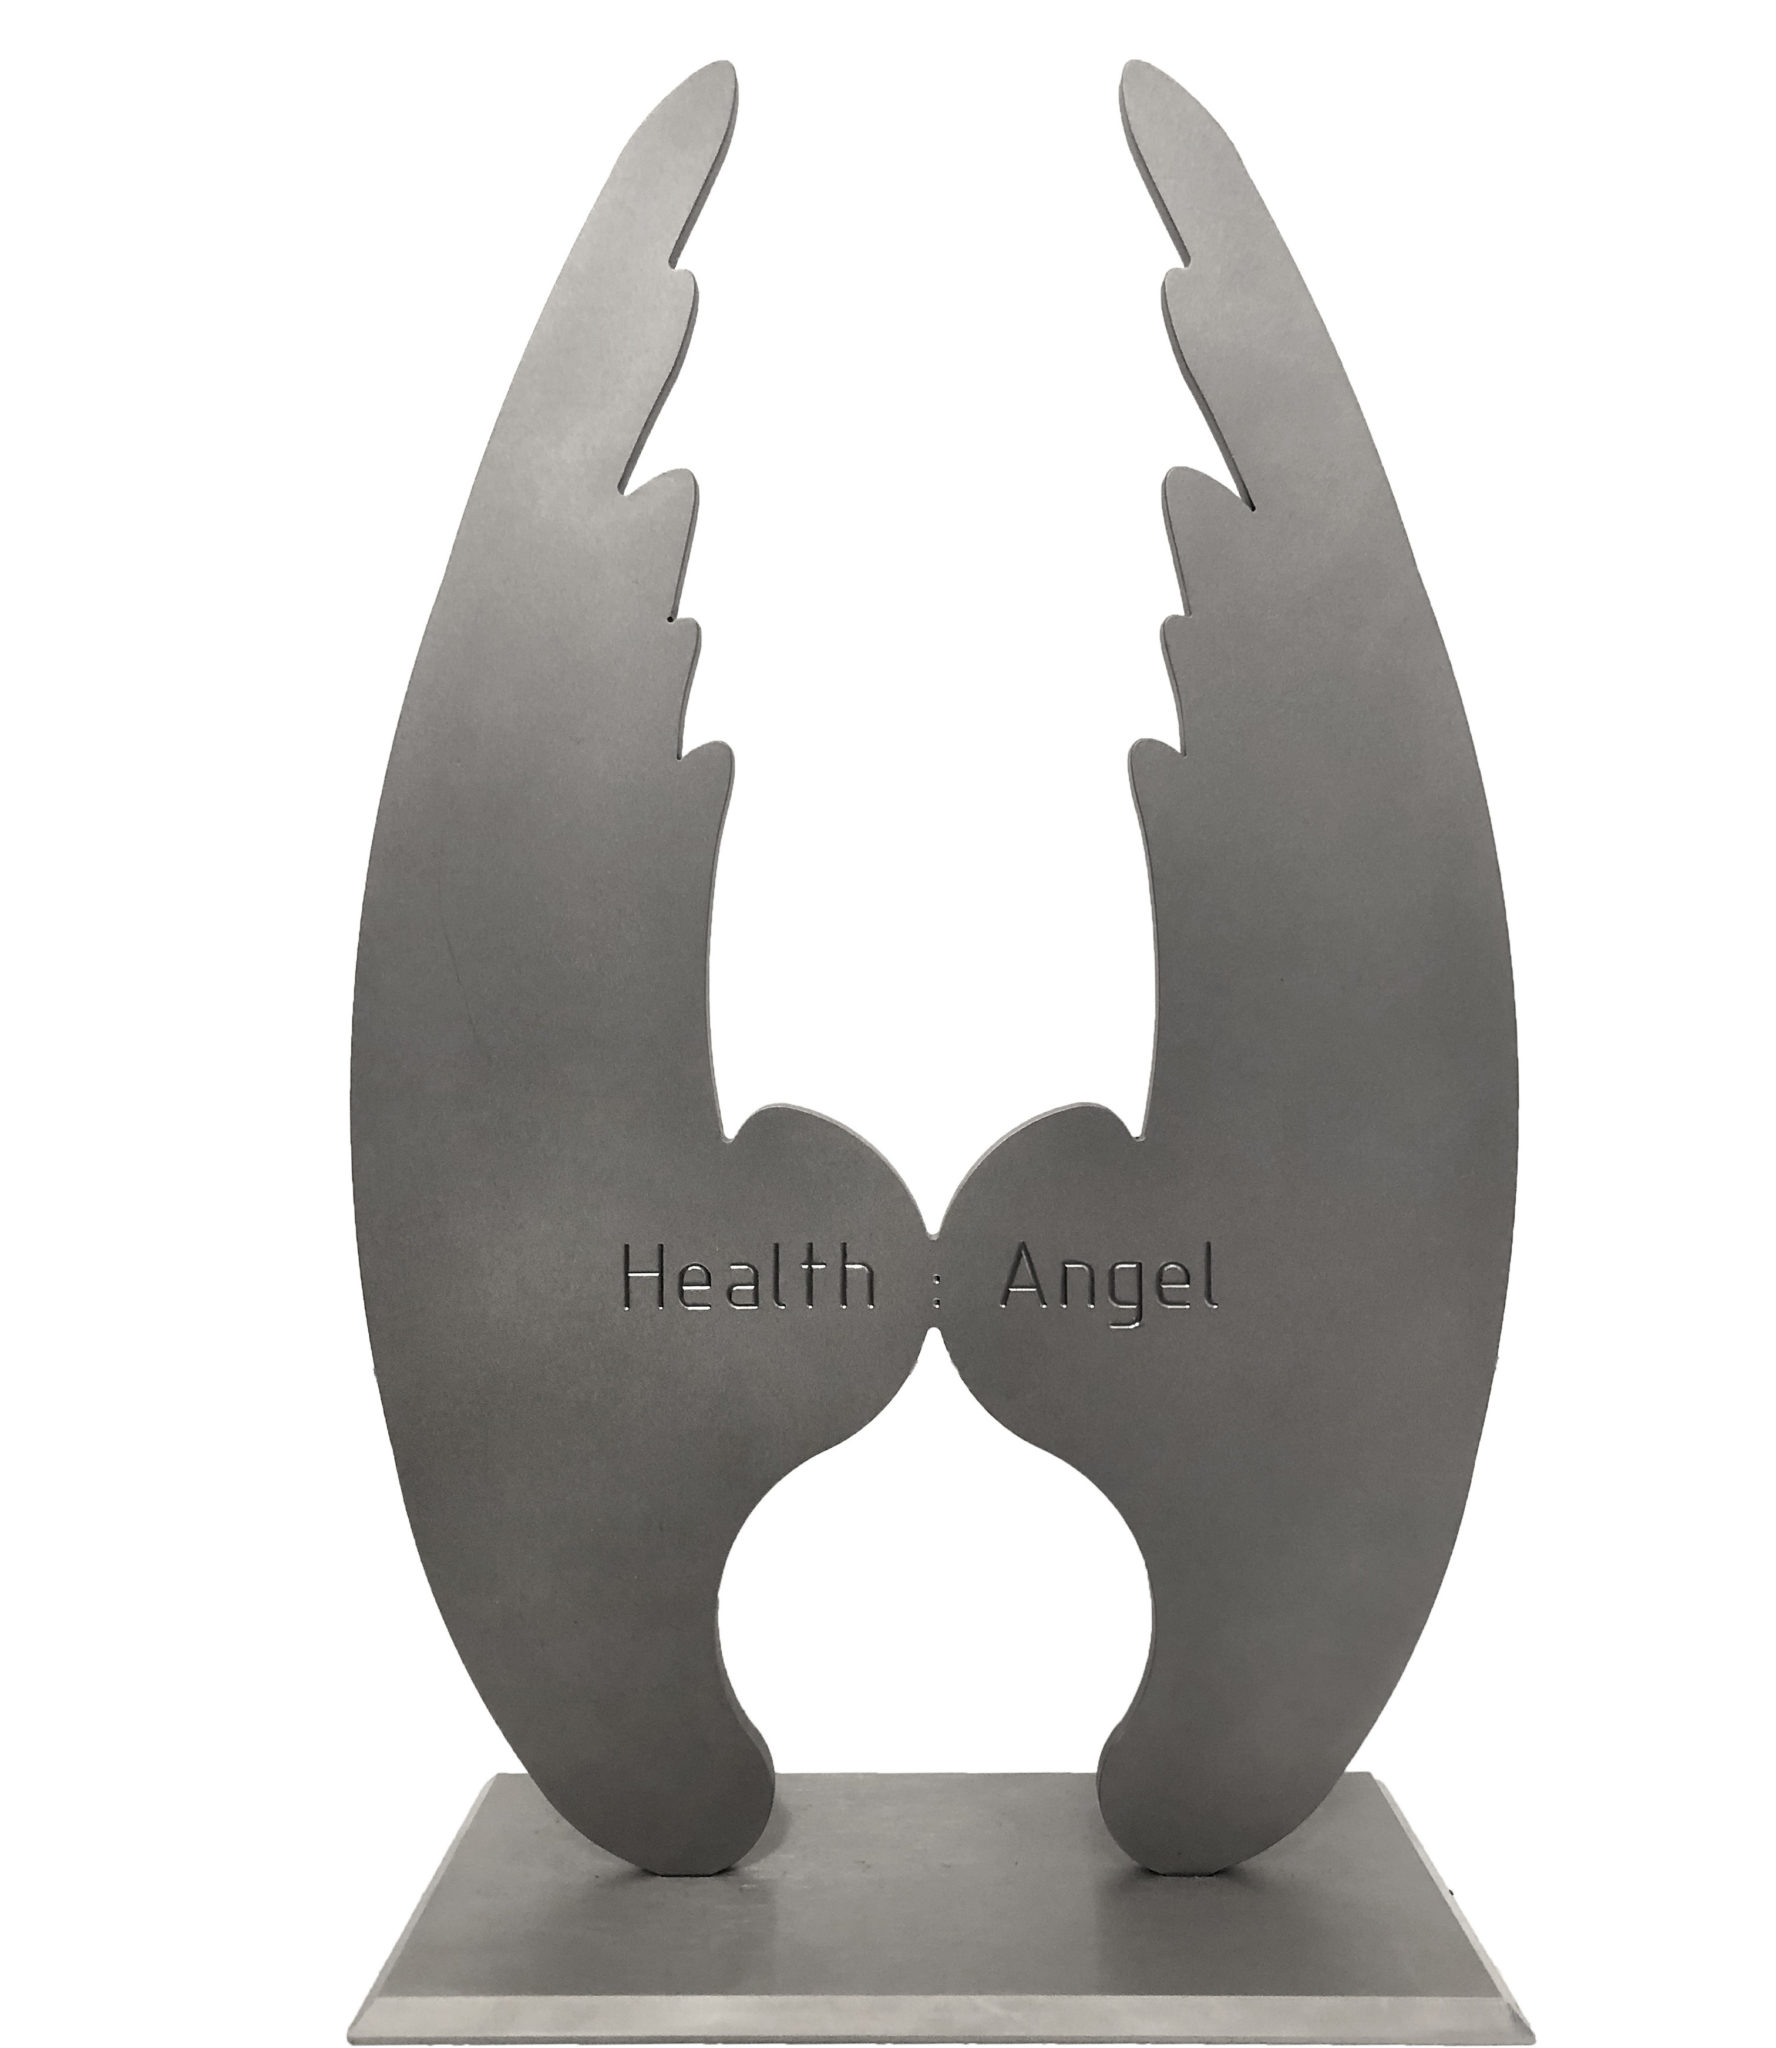 Health:Angel Award